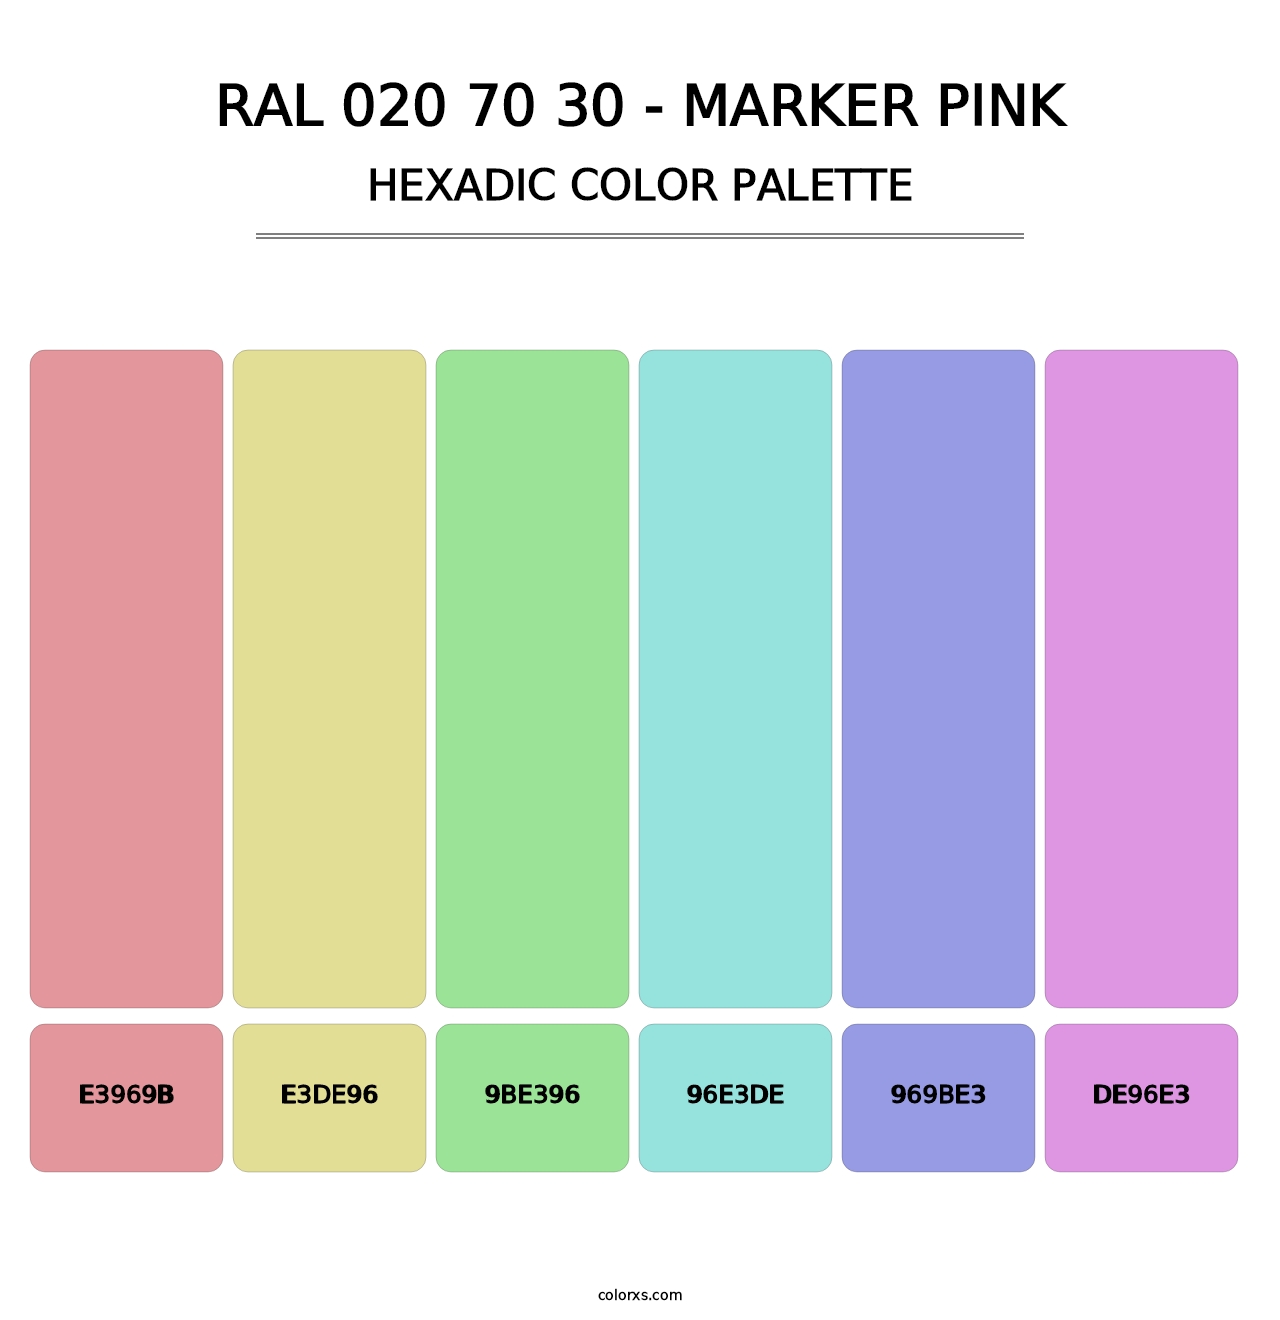 RAL 020 70 30 - Marker Pink - Hexadic Color Palette